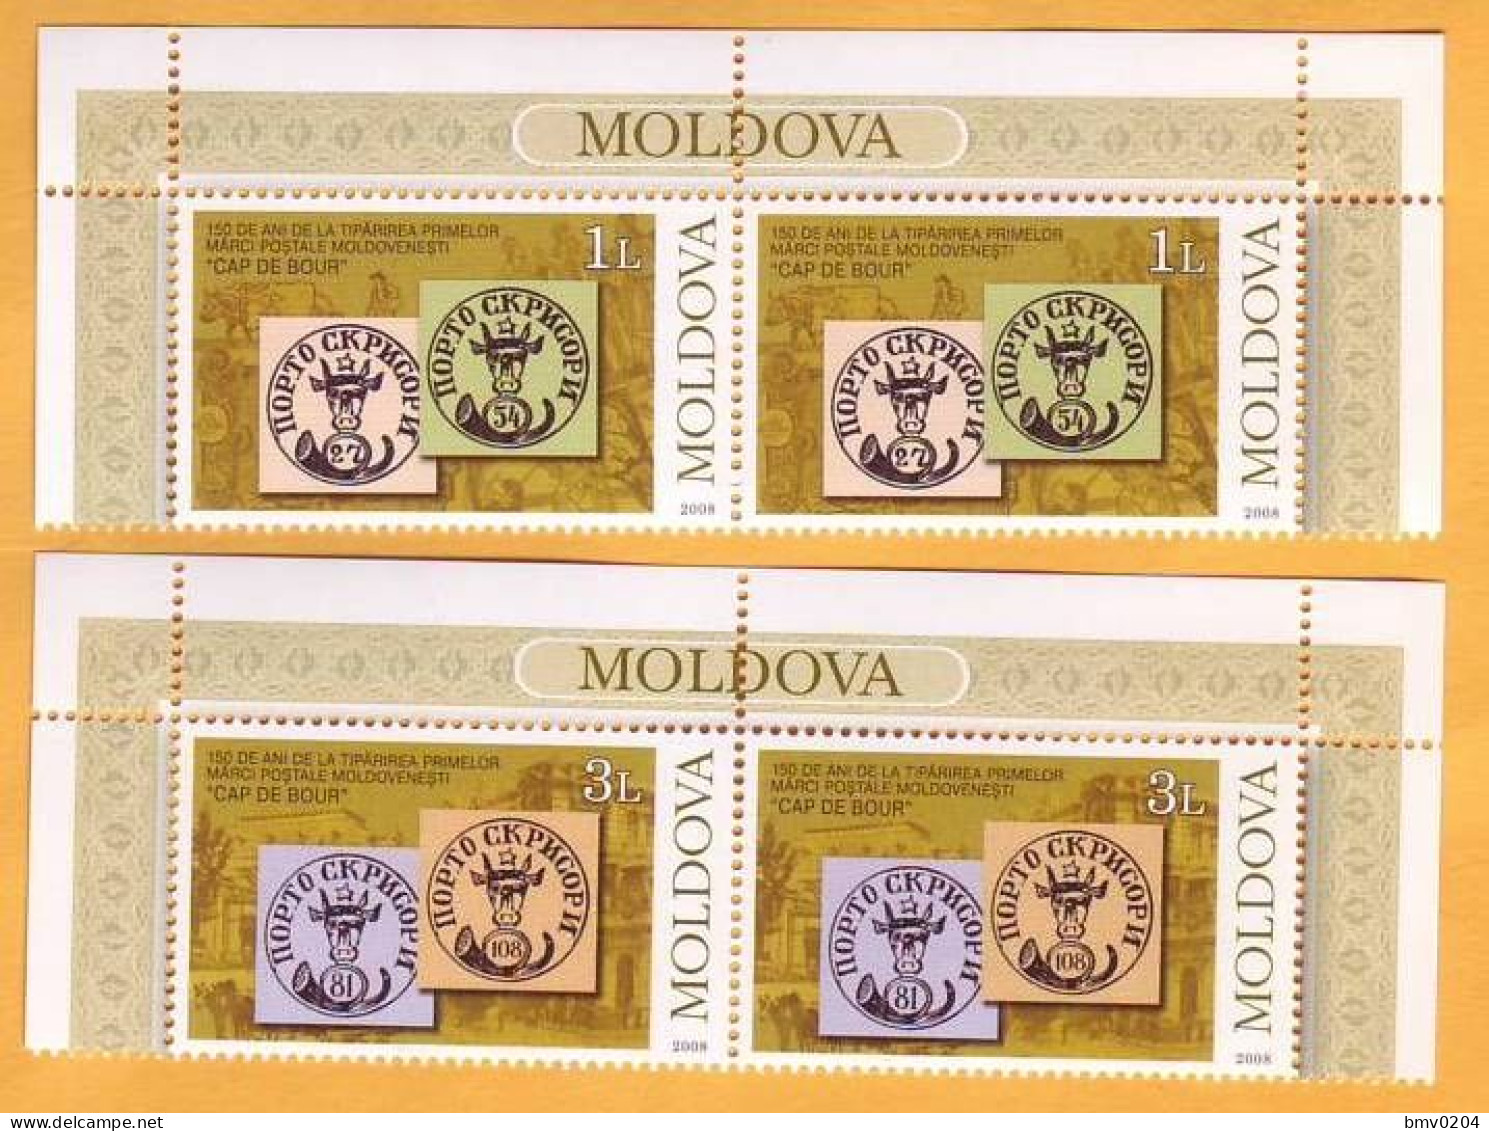 2008 Moldova Moldavie 150. Edition Of The First Postage Stamps Of The Moldavian Principality "Cap De Bour" 2x2v Mint. - Moldavie